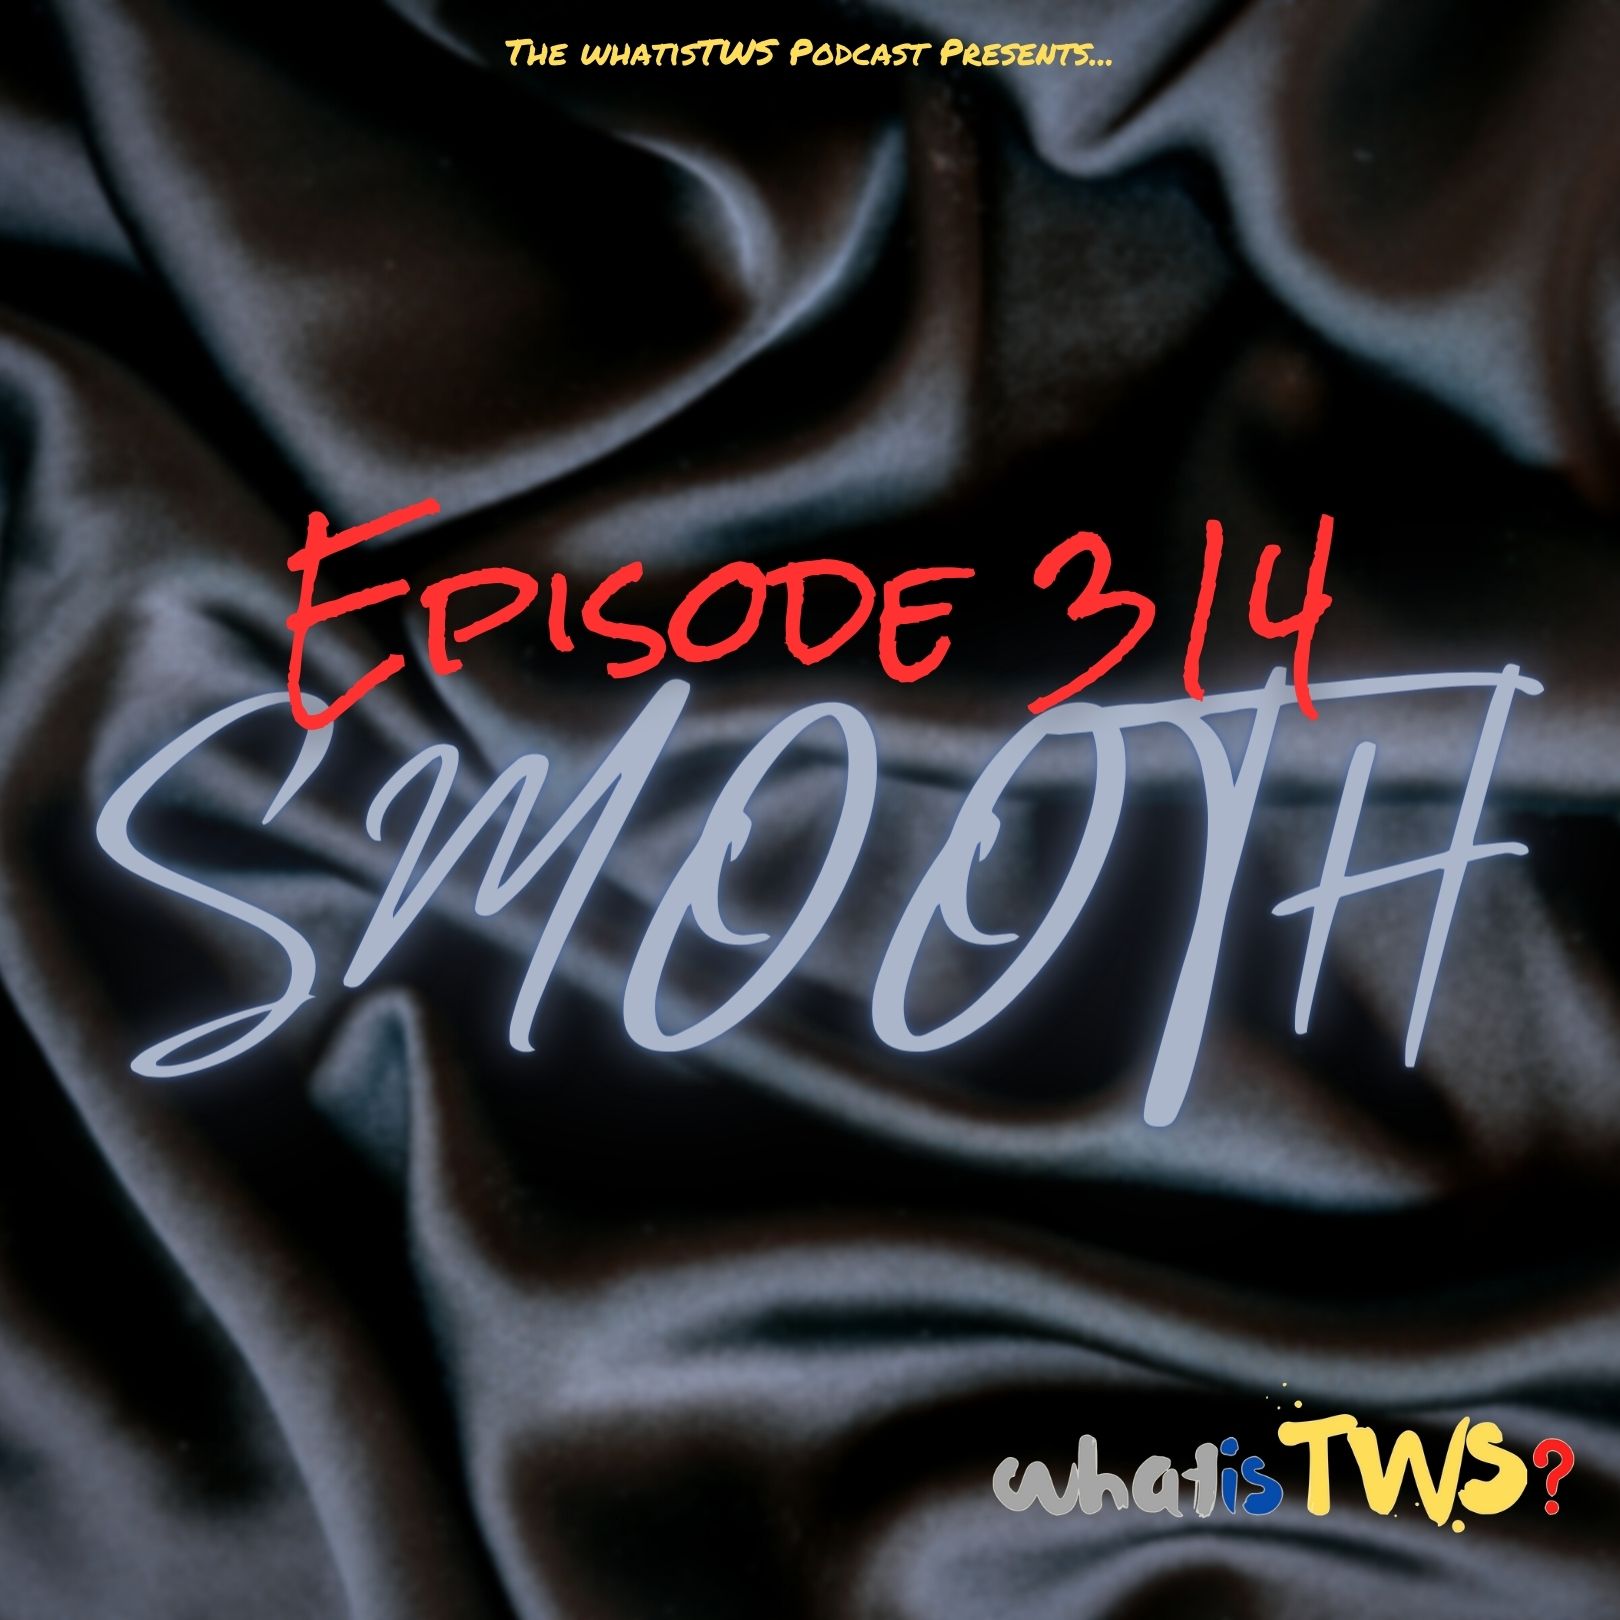 Episode 314 - Smooth